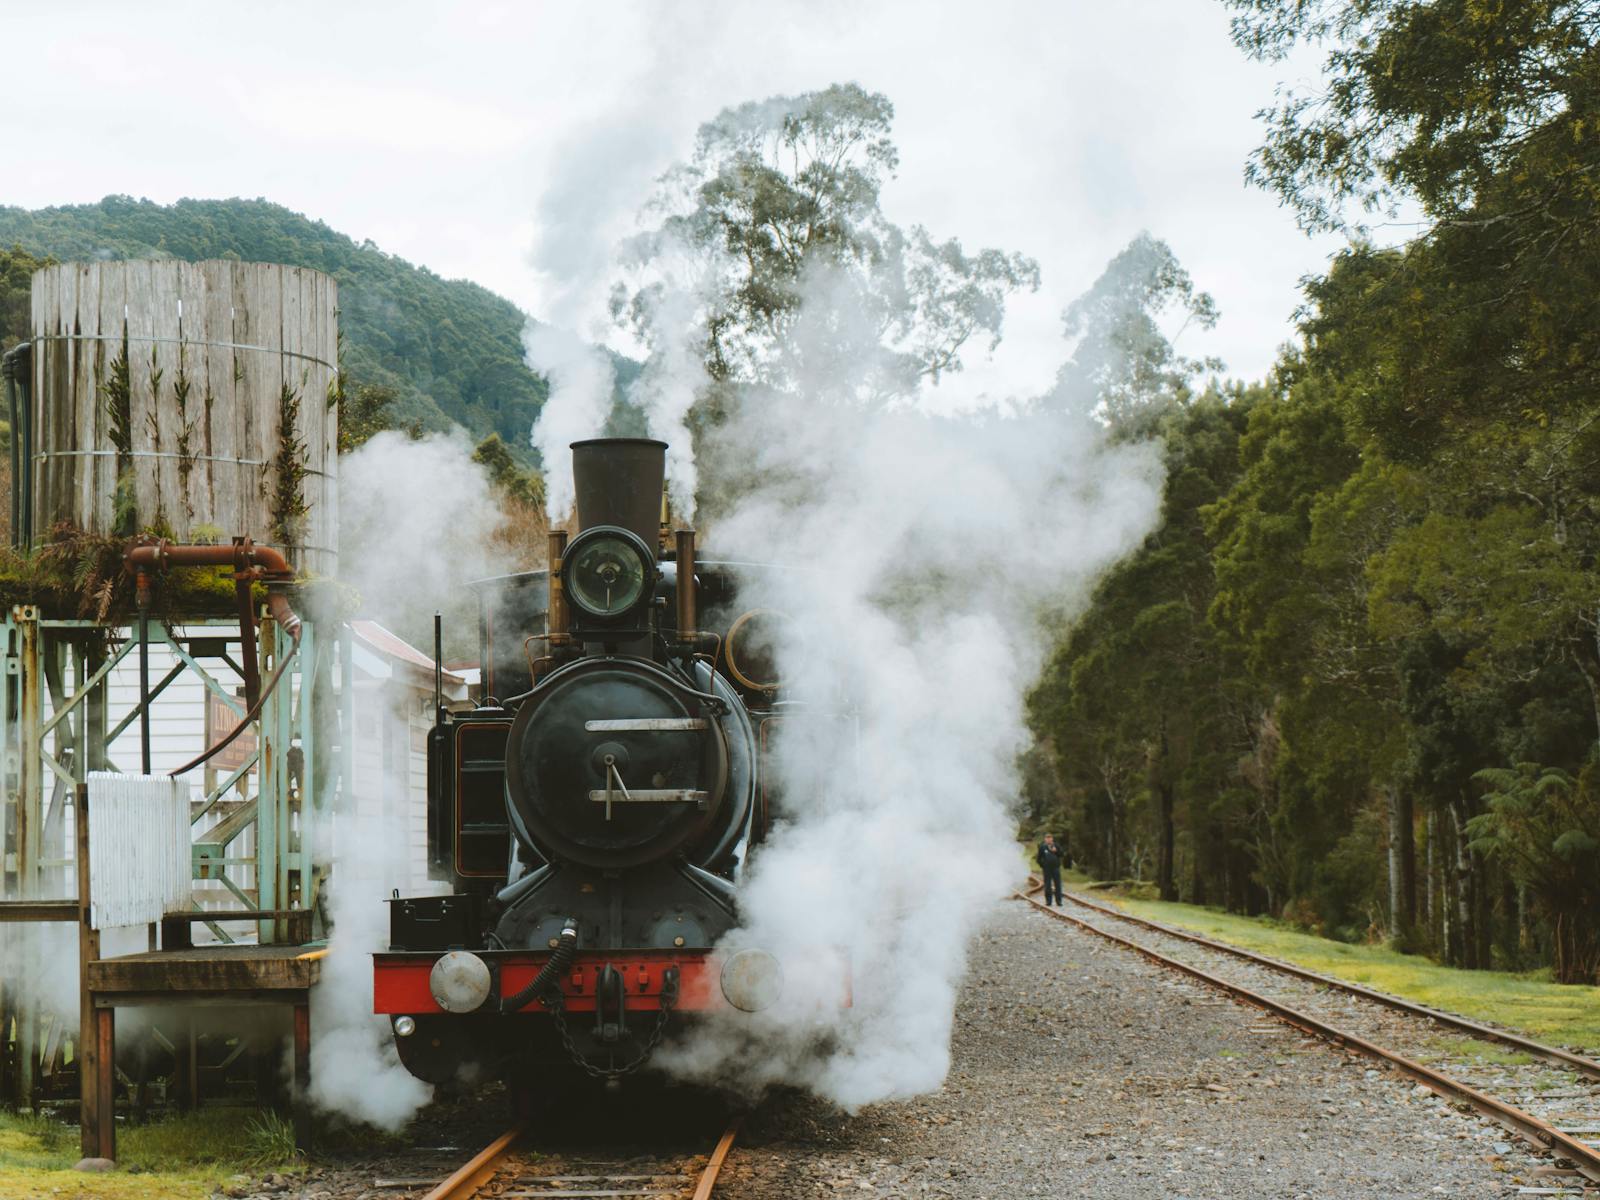 A steam locomotive lets off steam next to a station platform in the bush